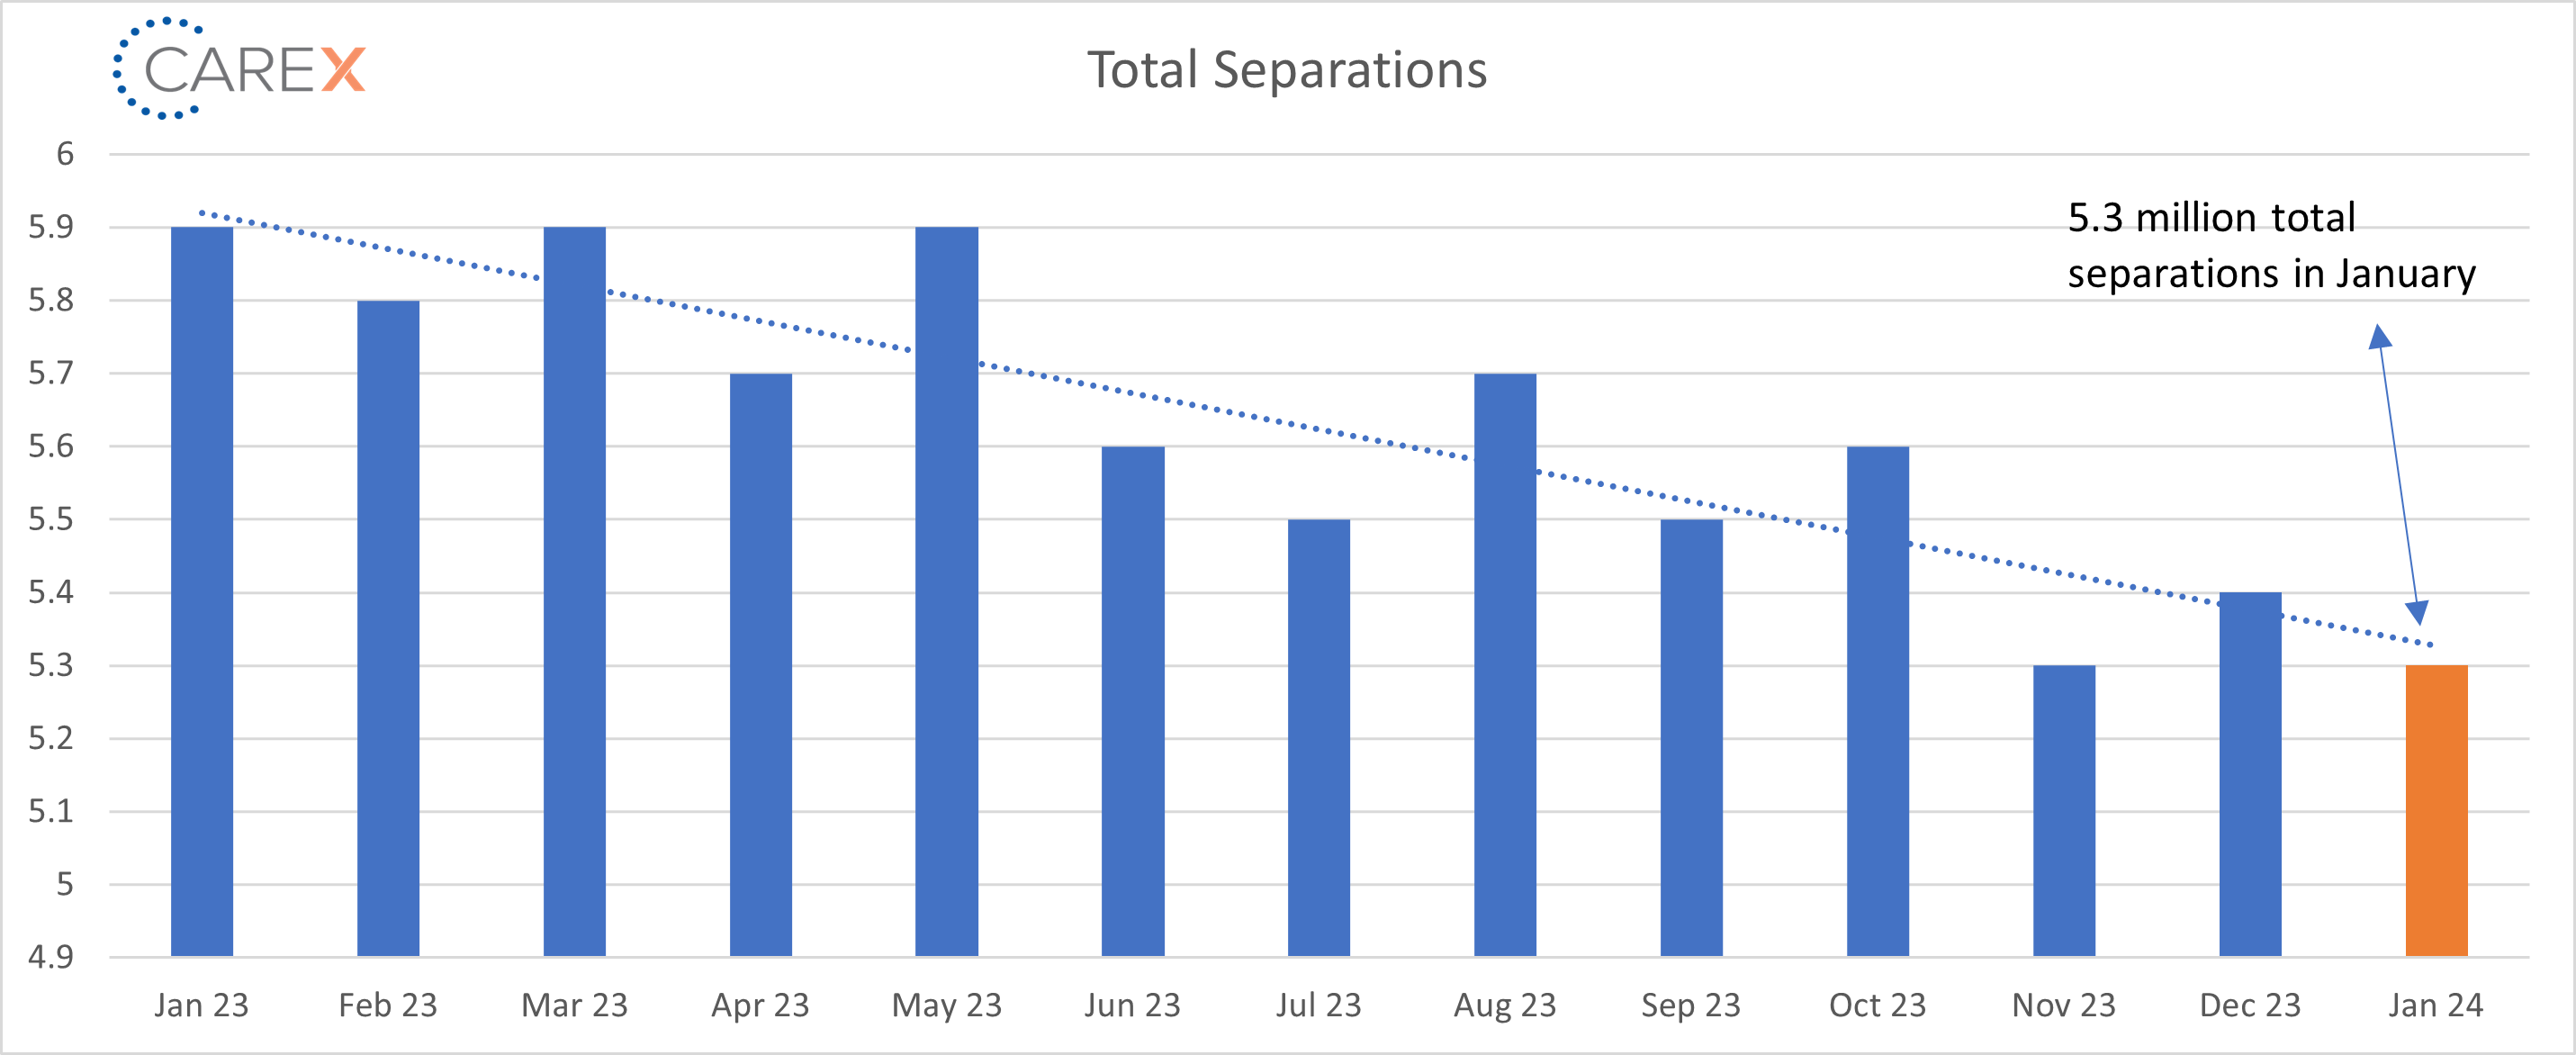 5.3 million separations in Jan